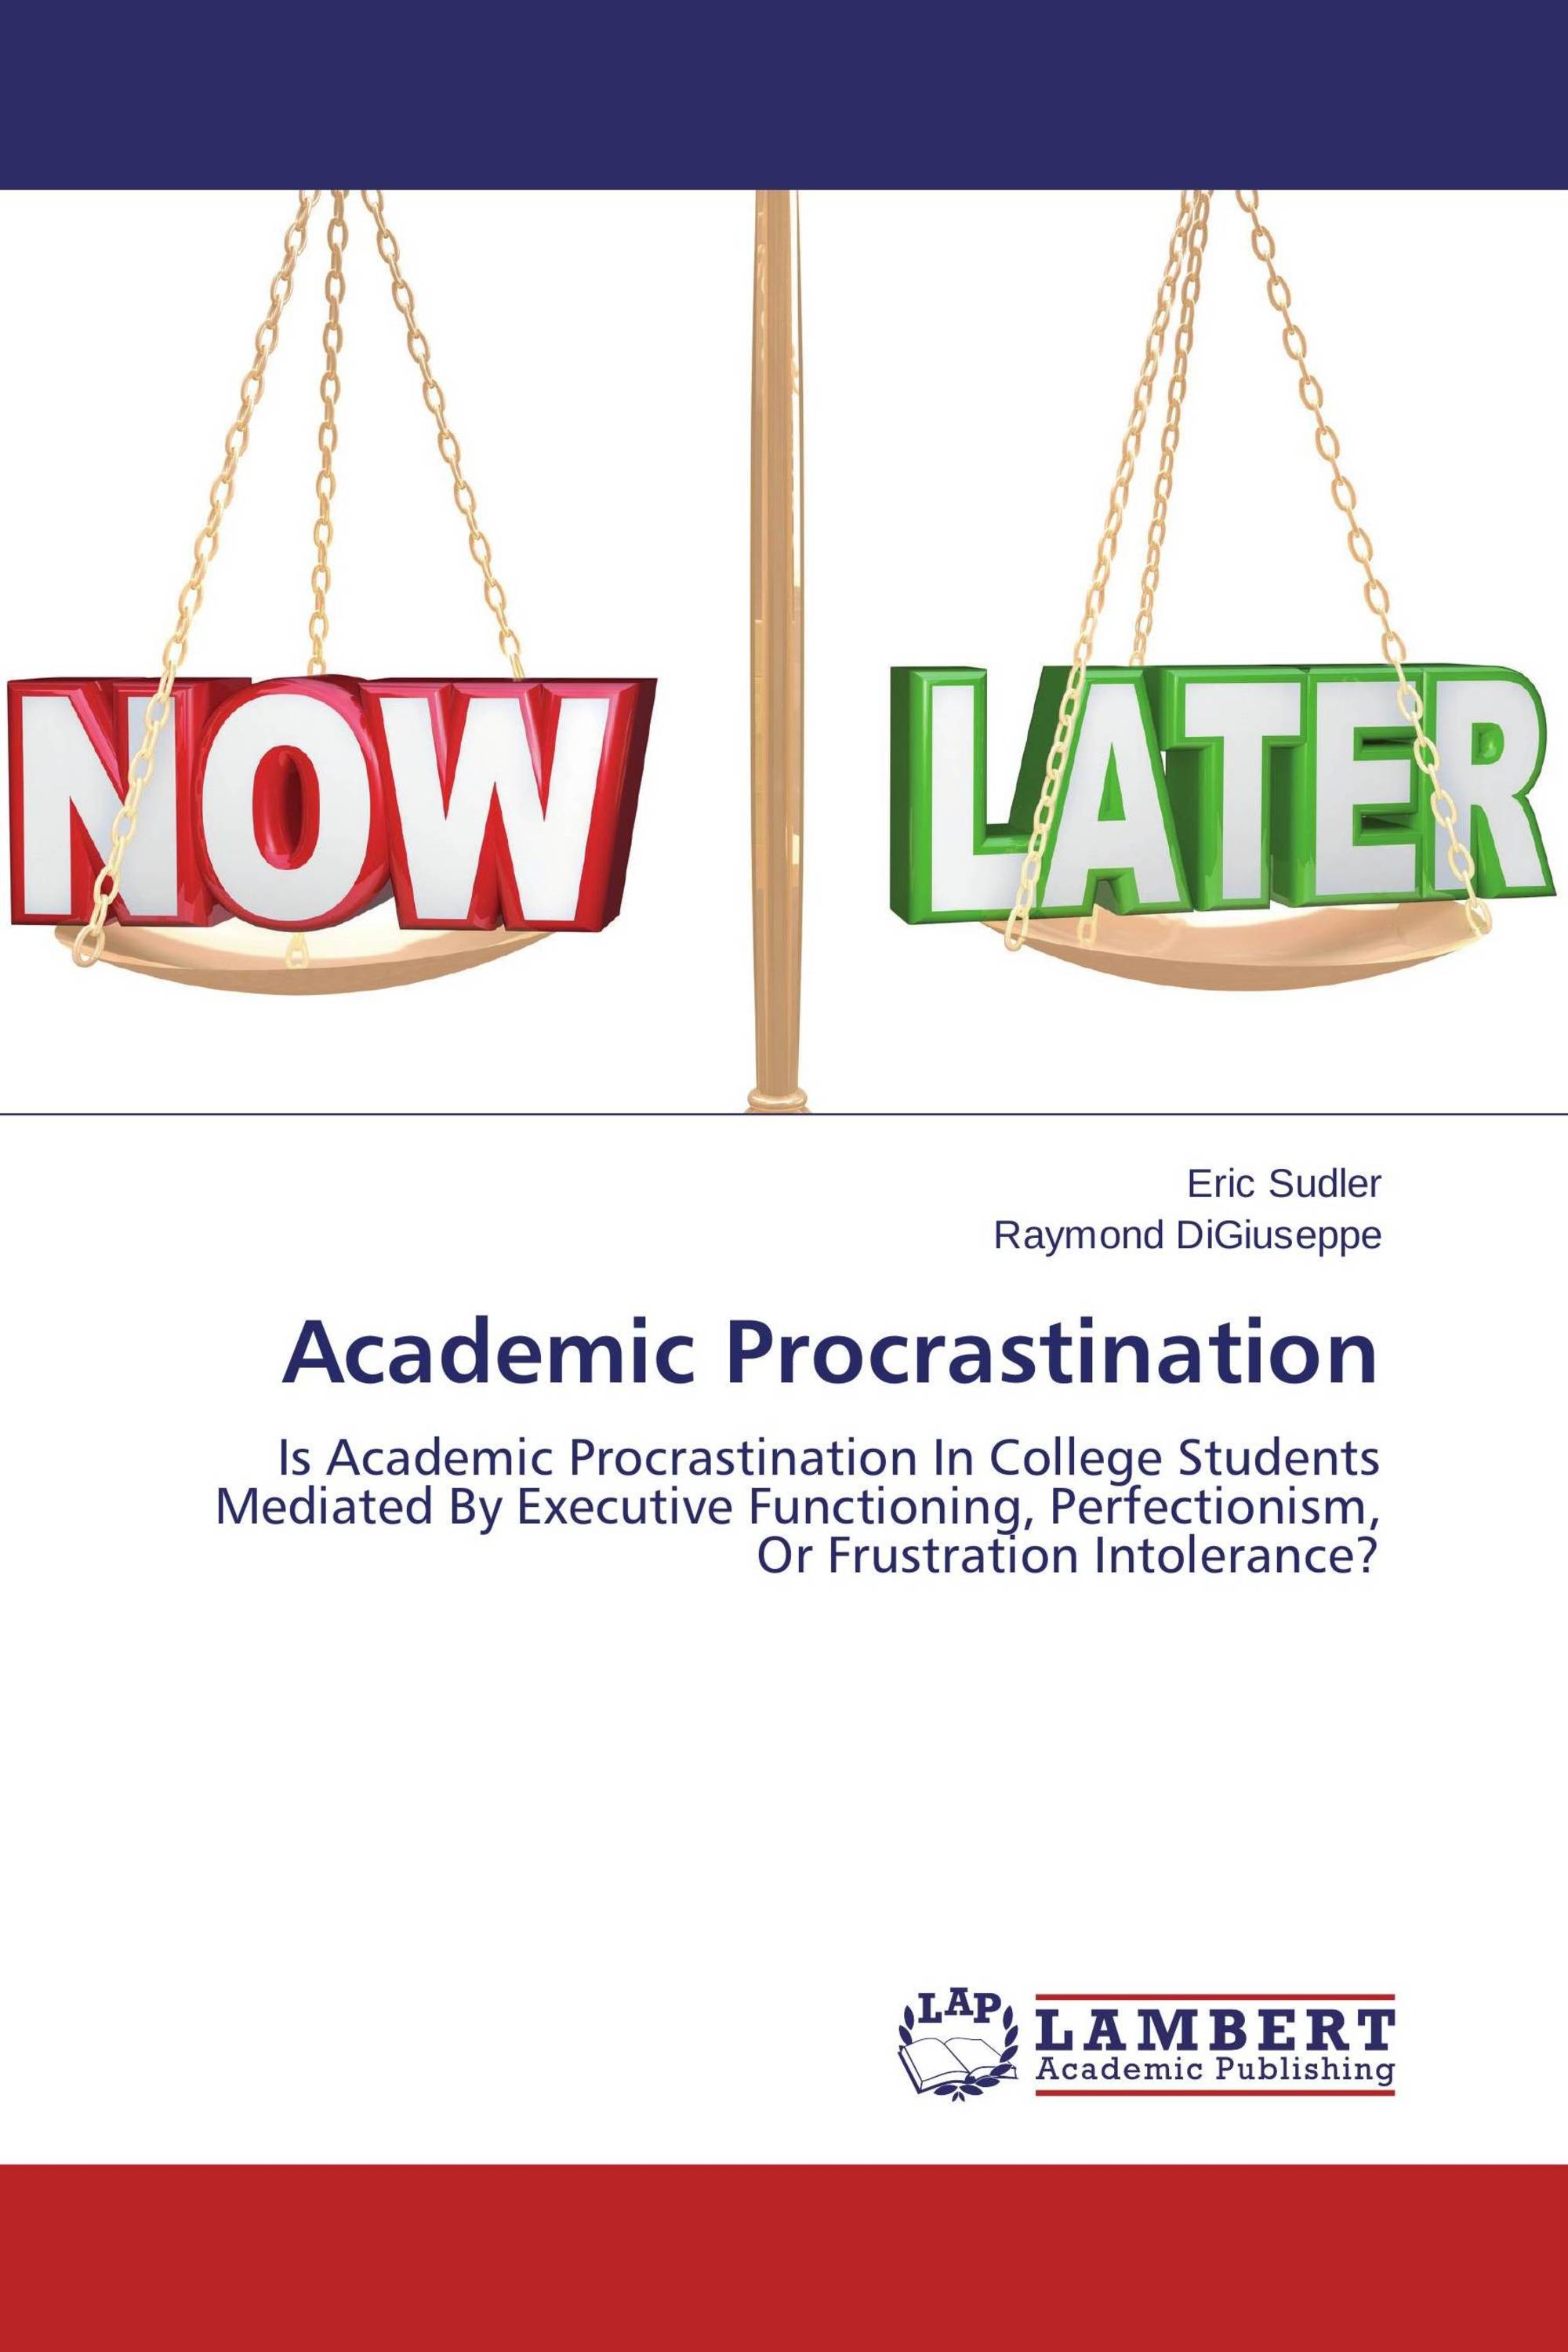 research on procrastination